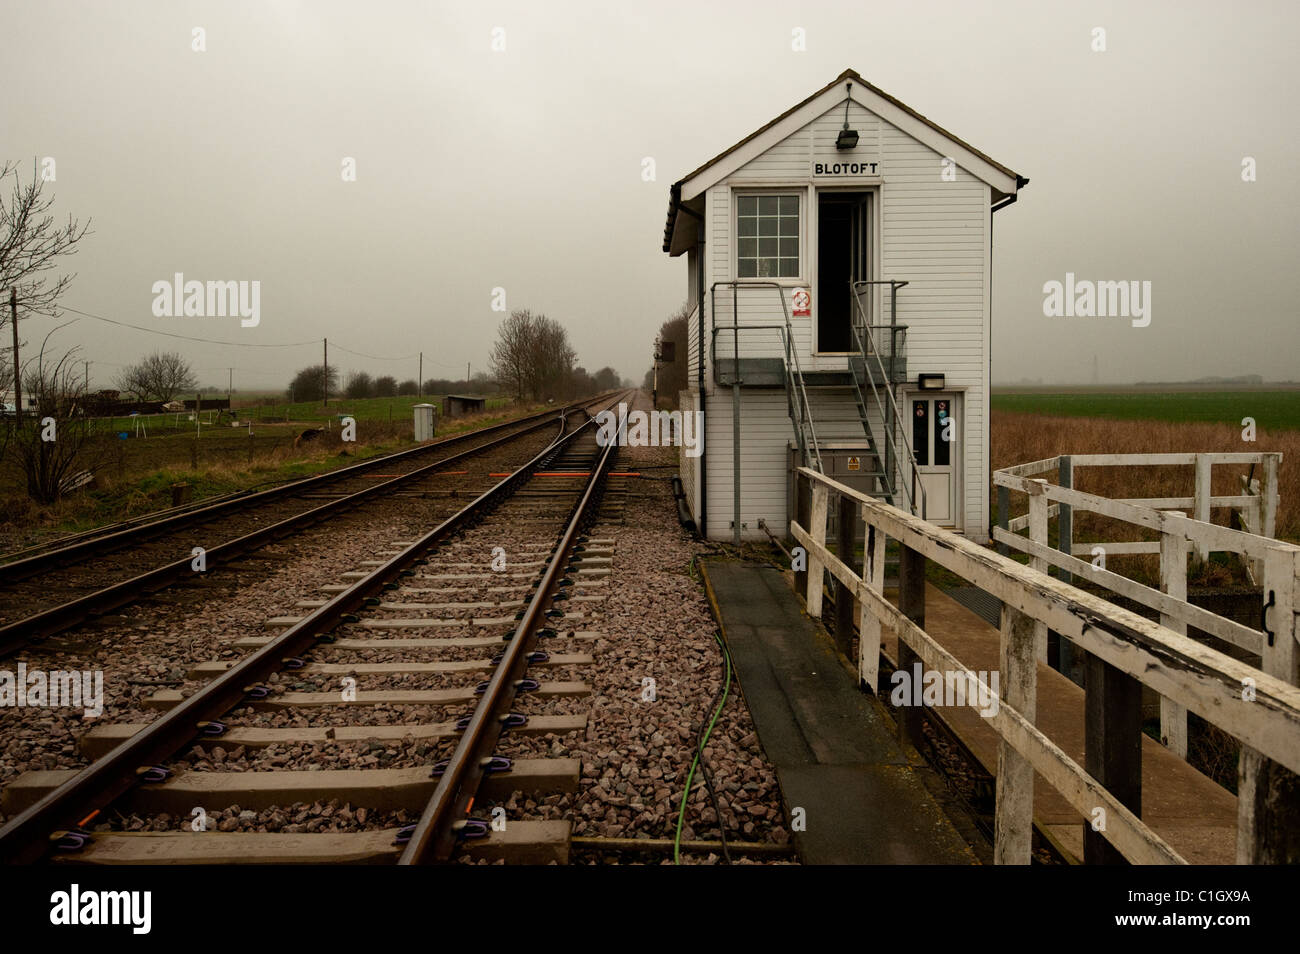 Blotoft signal box and level crossing by South Drove Farm, Helpringham Fen. Stock Photo